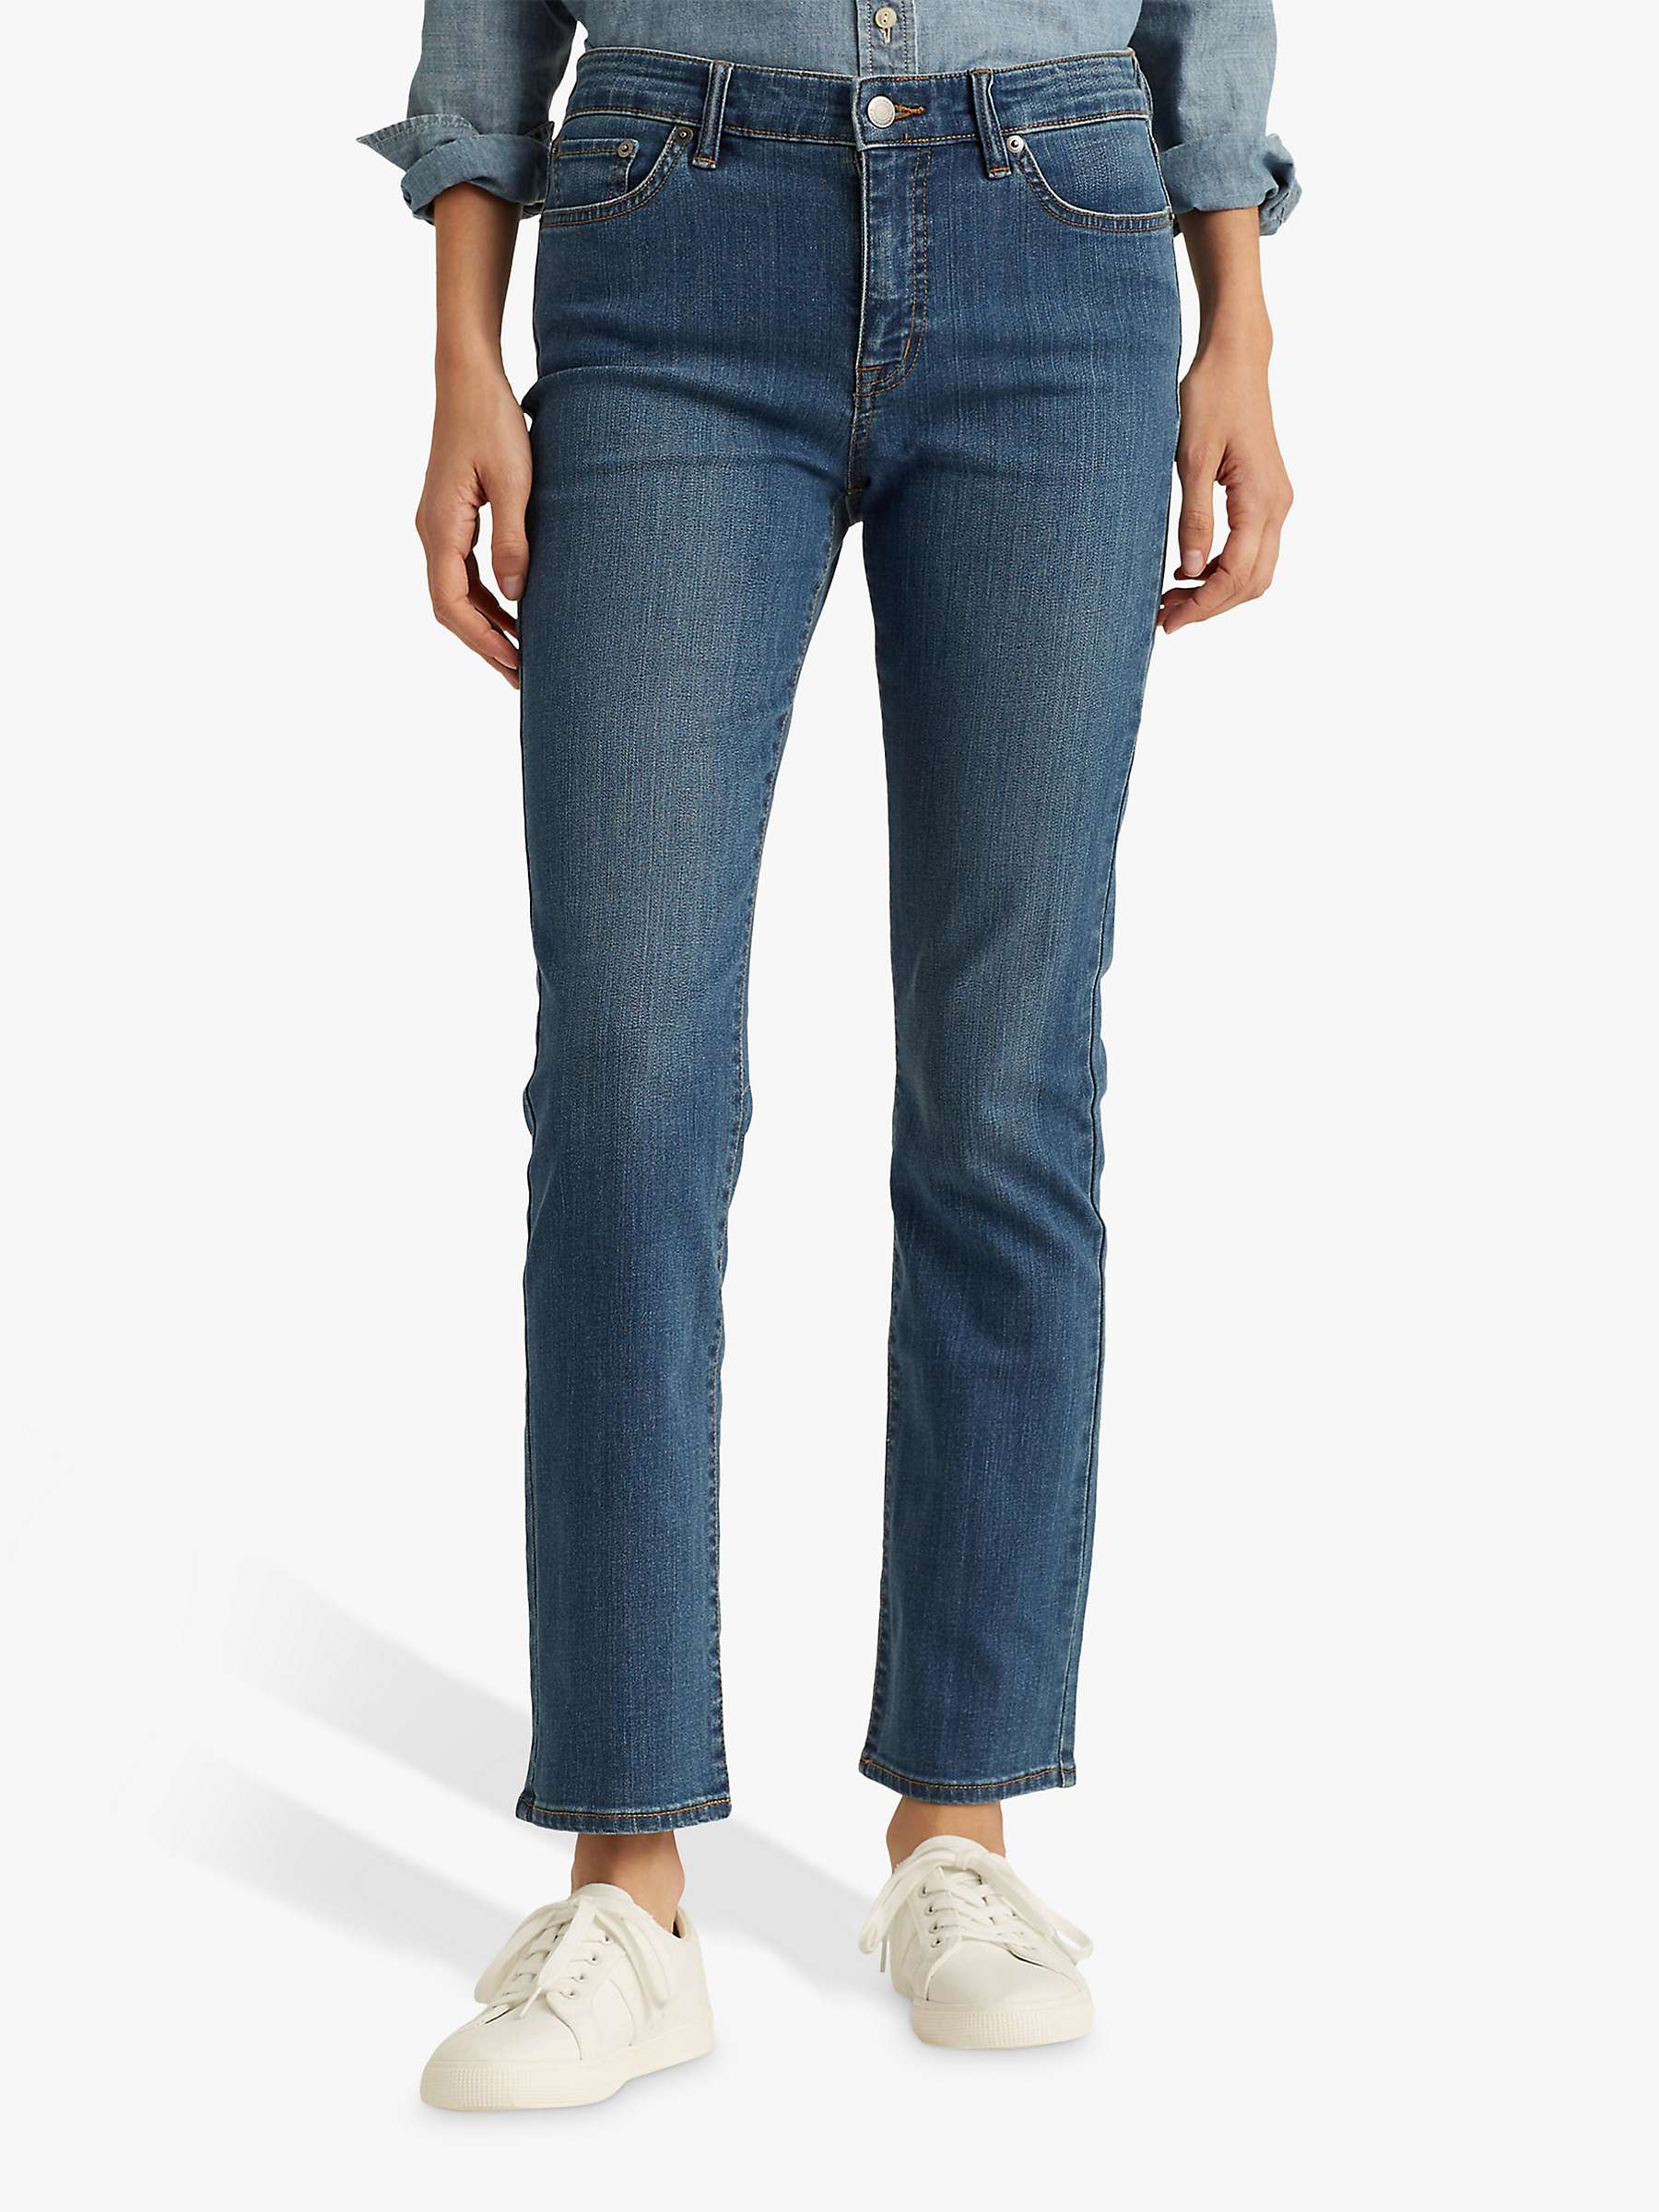 Buy Lauren Ralph Lauren Premier Mid Rise Straight Leg Jeans, Ocean Blue Wash Denim Online at johnlewis.com